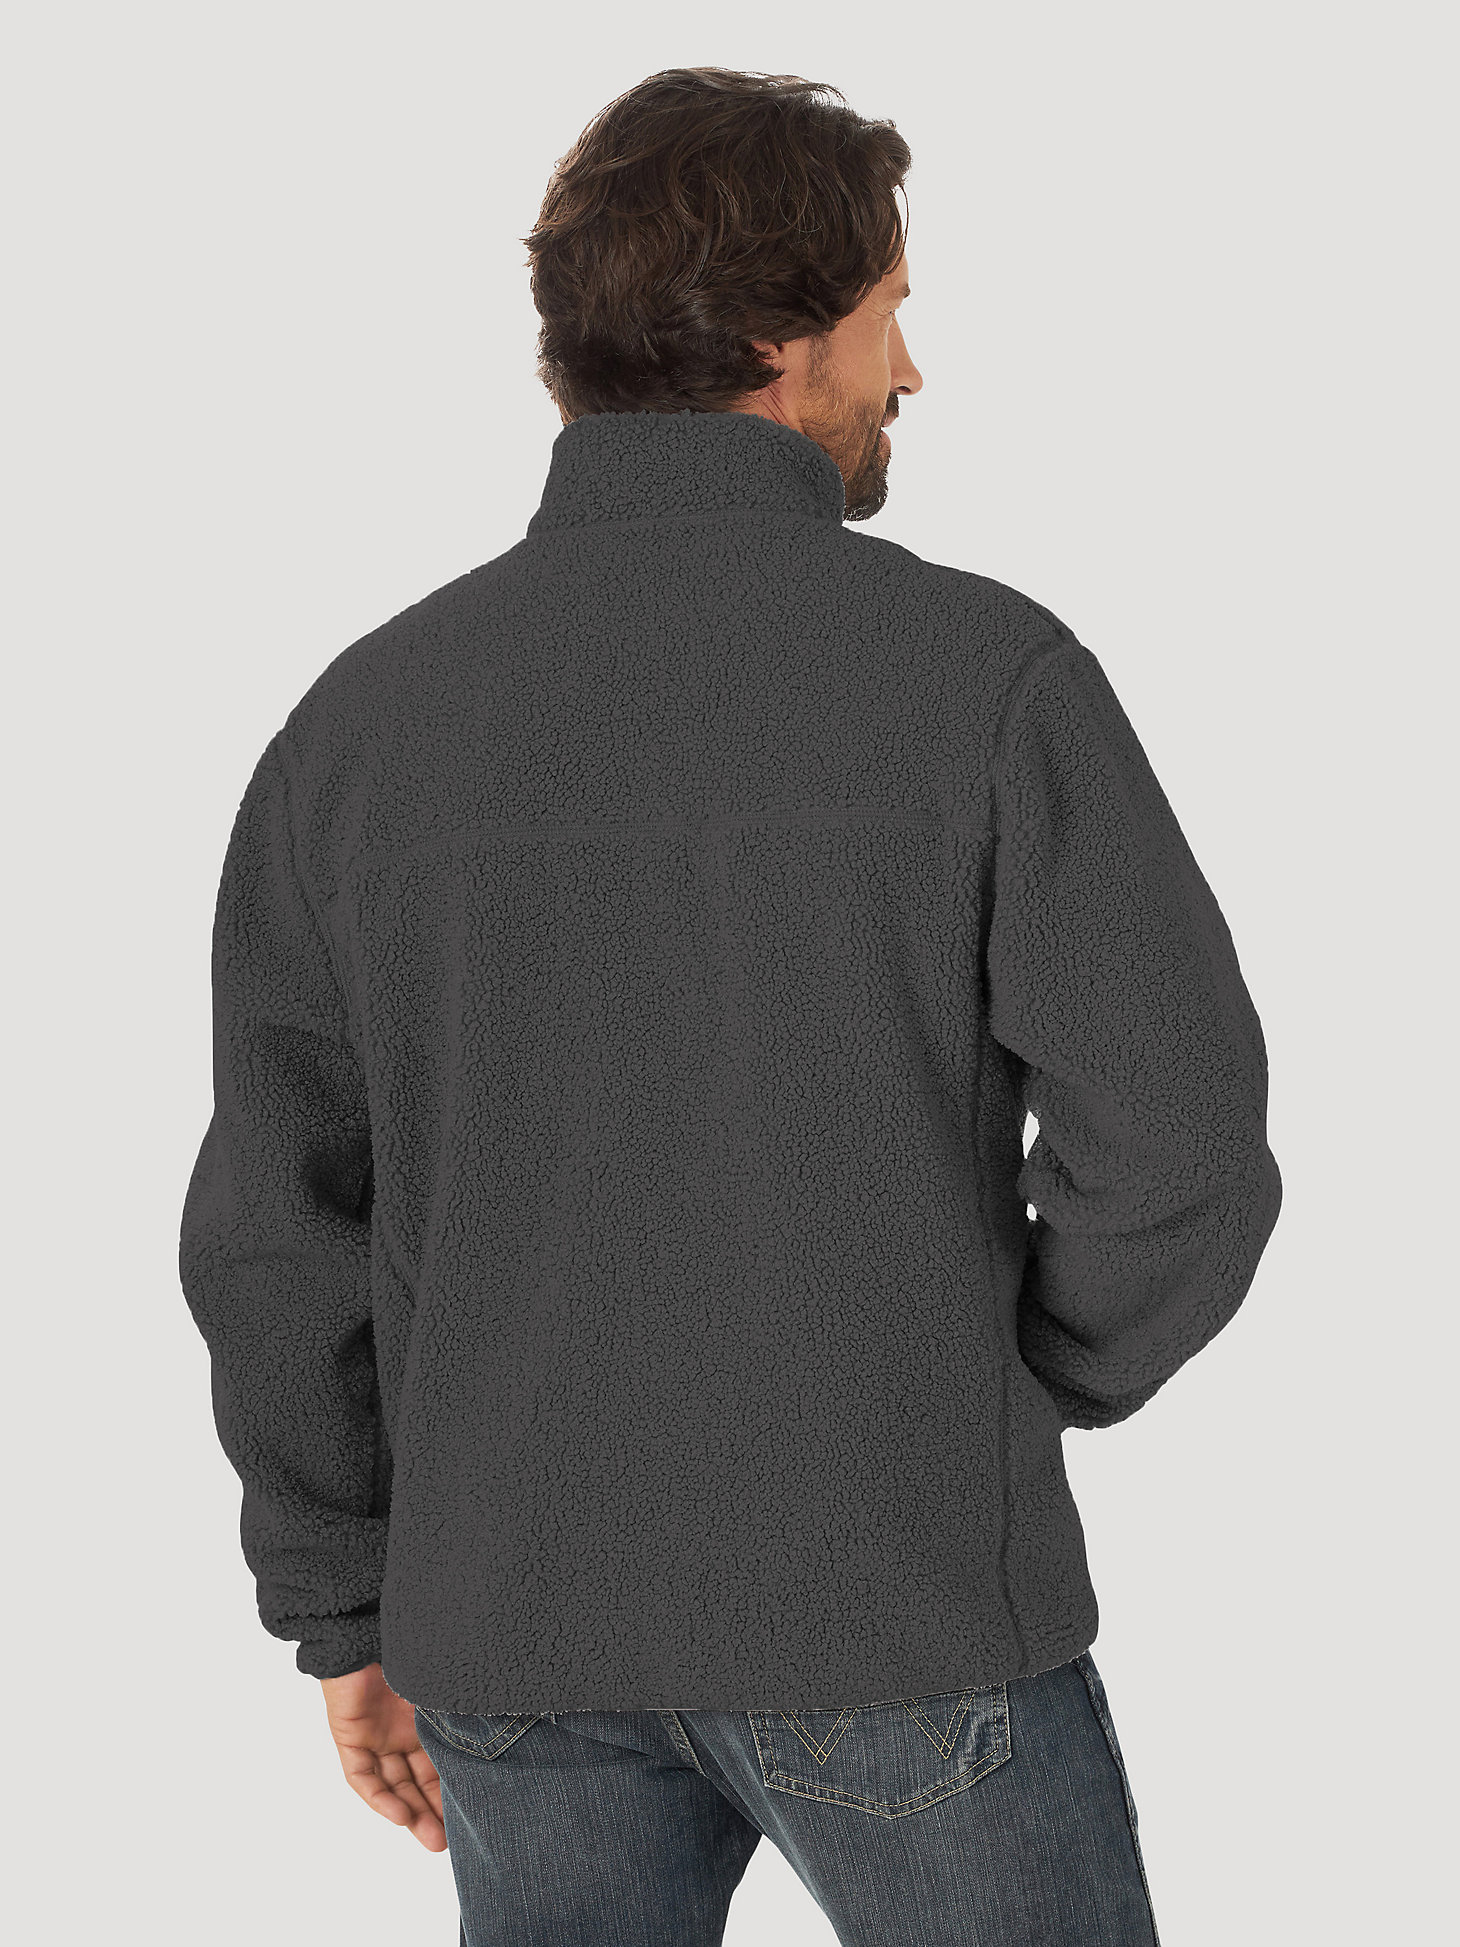 Men's Wrangler Zip Front Multi Pocket Sherpa Jacket in Charcoal alternative view 2